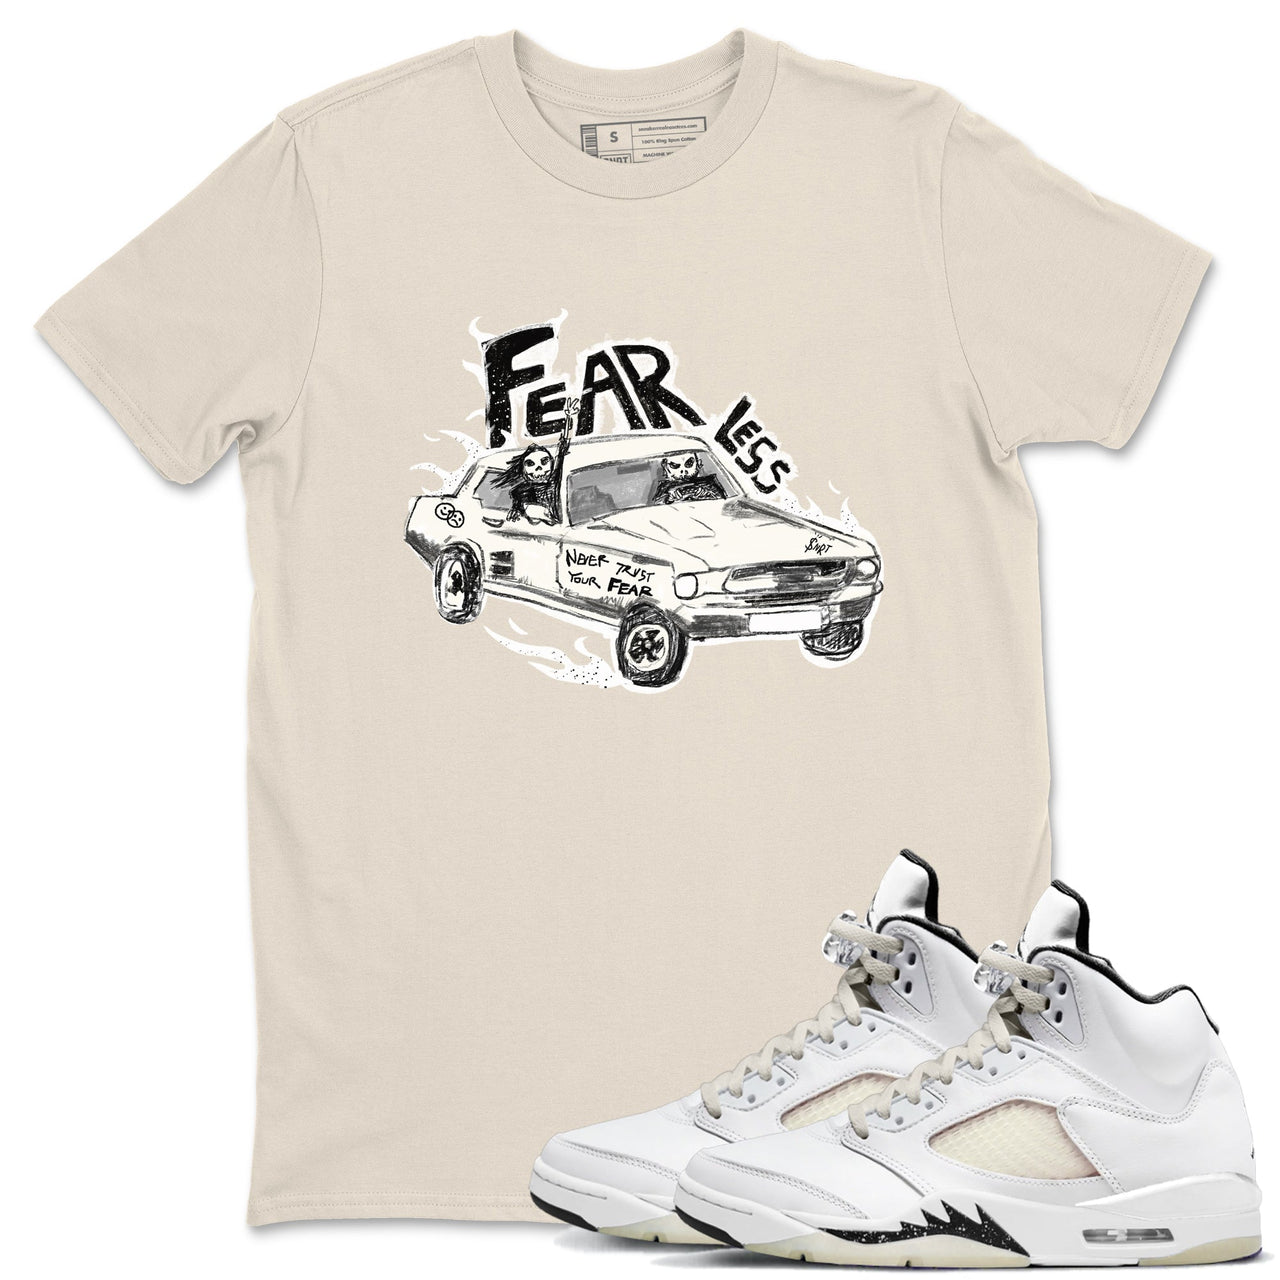 5s Sail shirt to match jordans Fearless Car sneaker tees Air Jordan 5 Sail SNRT Sneaker Release Tees unisex cotton Natural 1 crew neck shirt